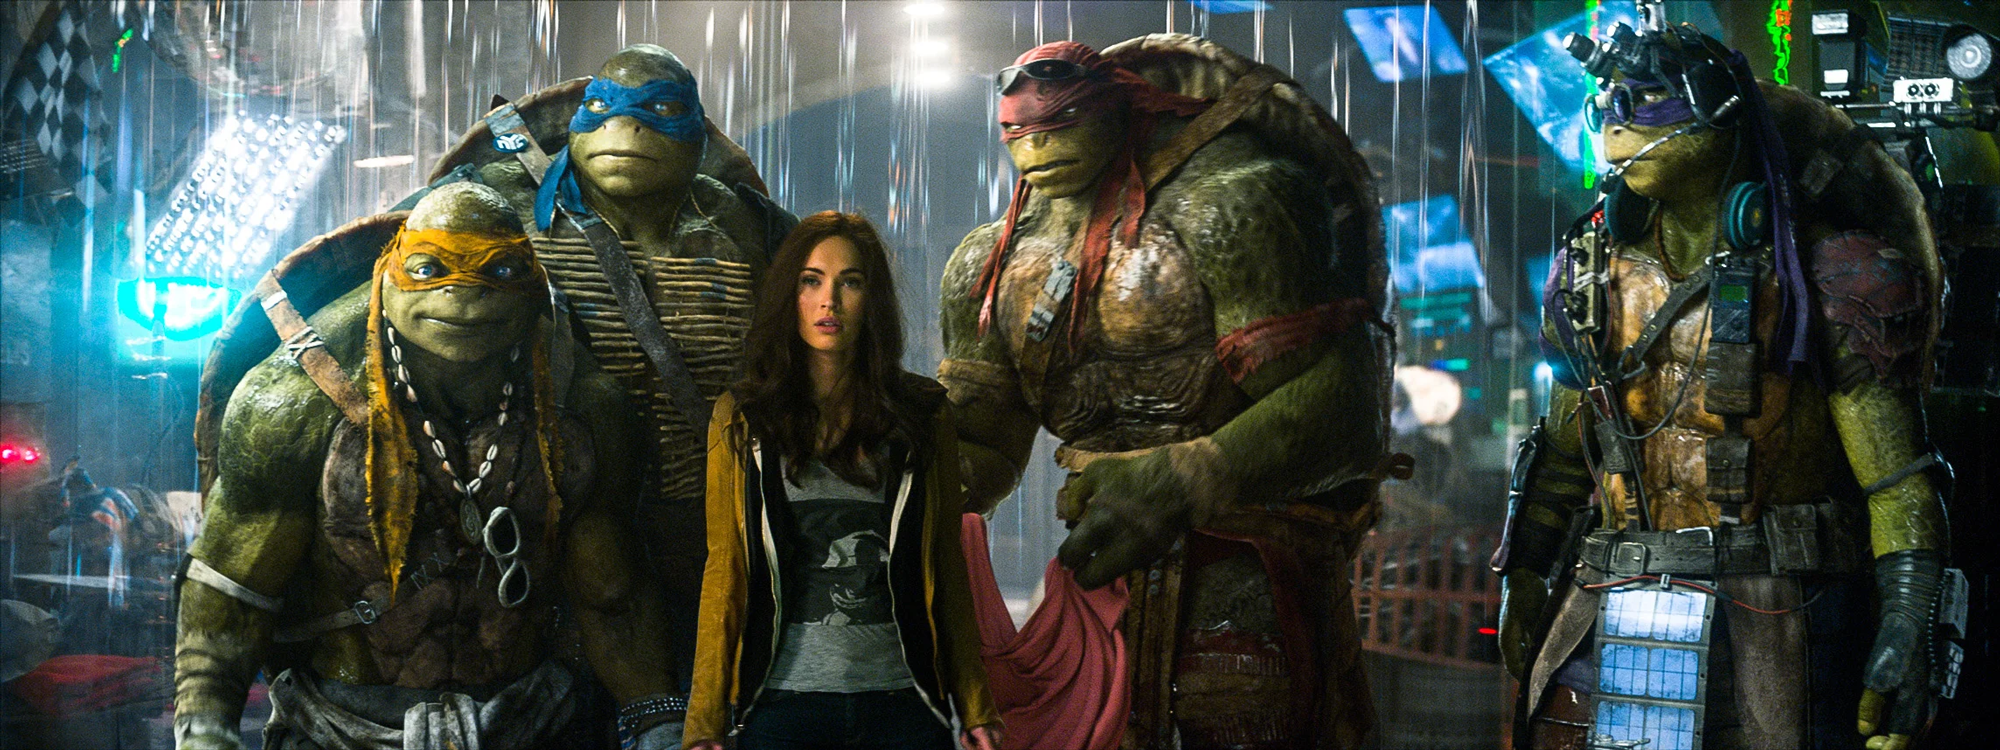 Accessories costumes designed by Lauren Urstadt for the movie Teenage Mutant Ninja Turtles starring Megan Fox